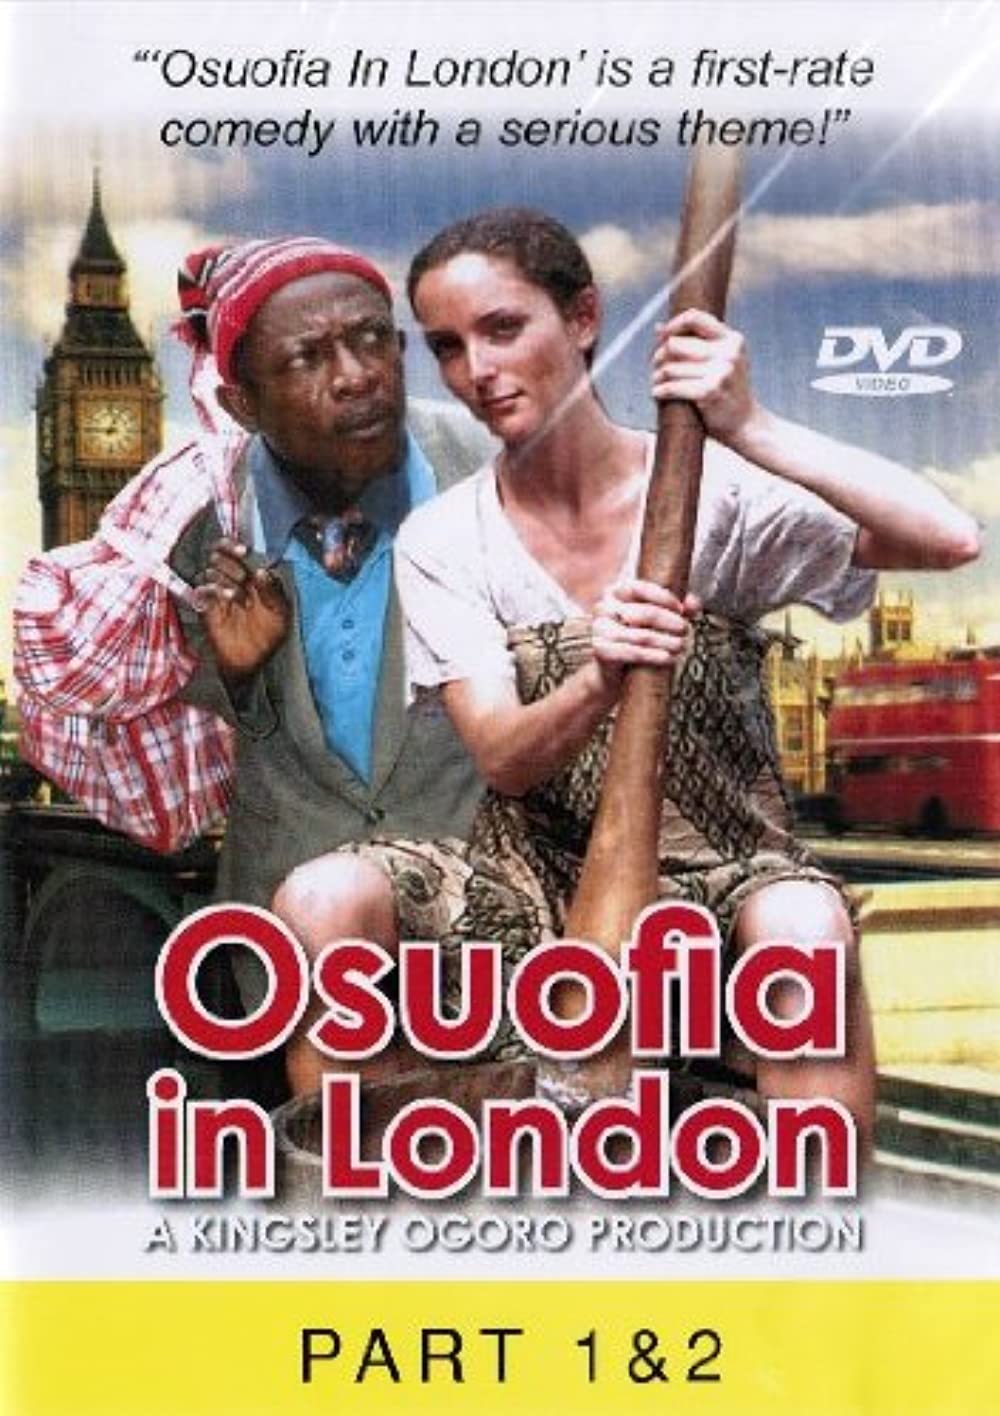 Osofia in London